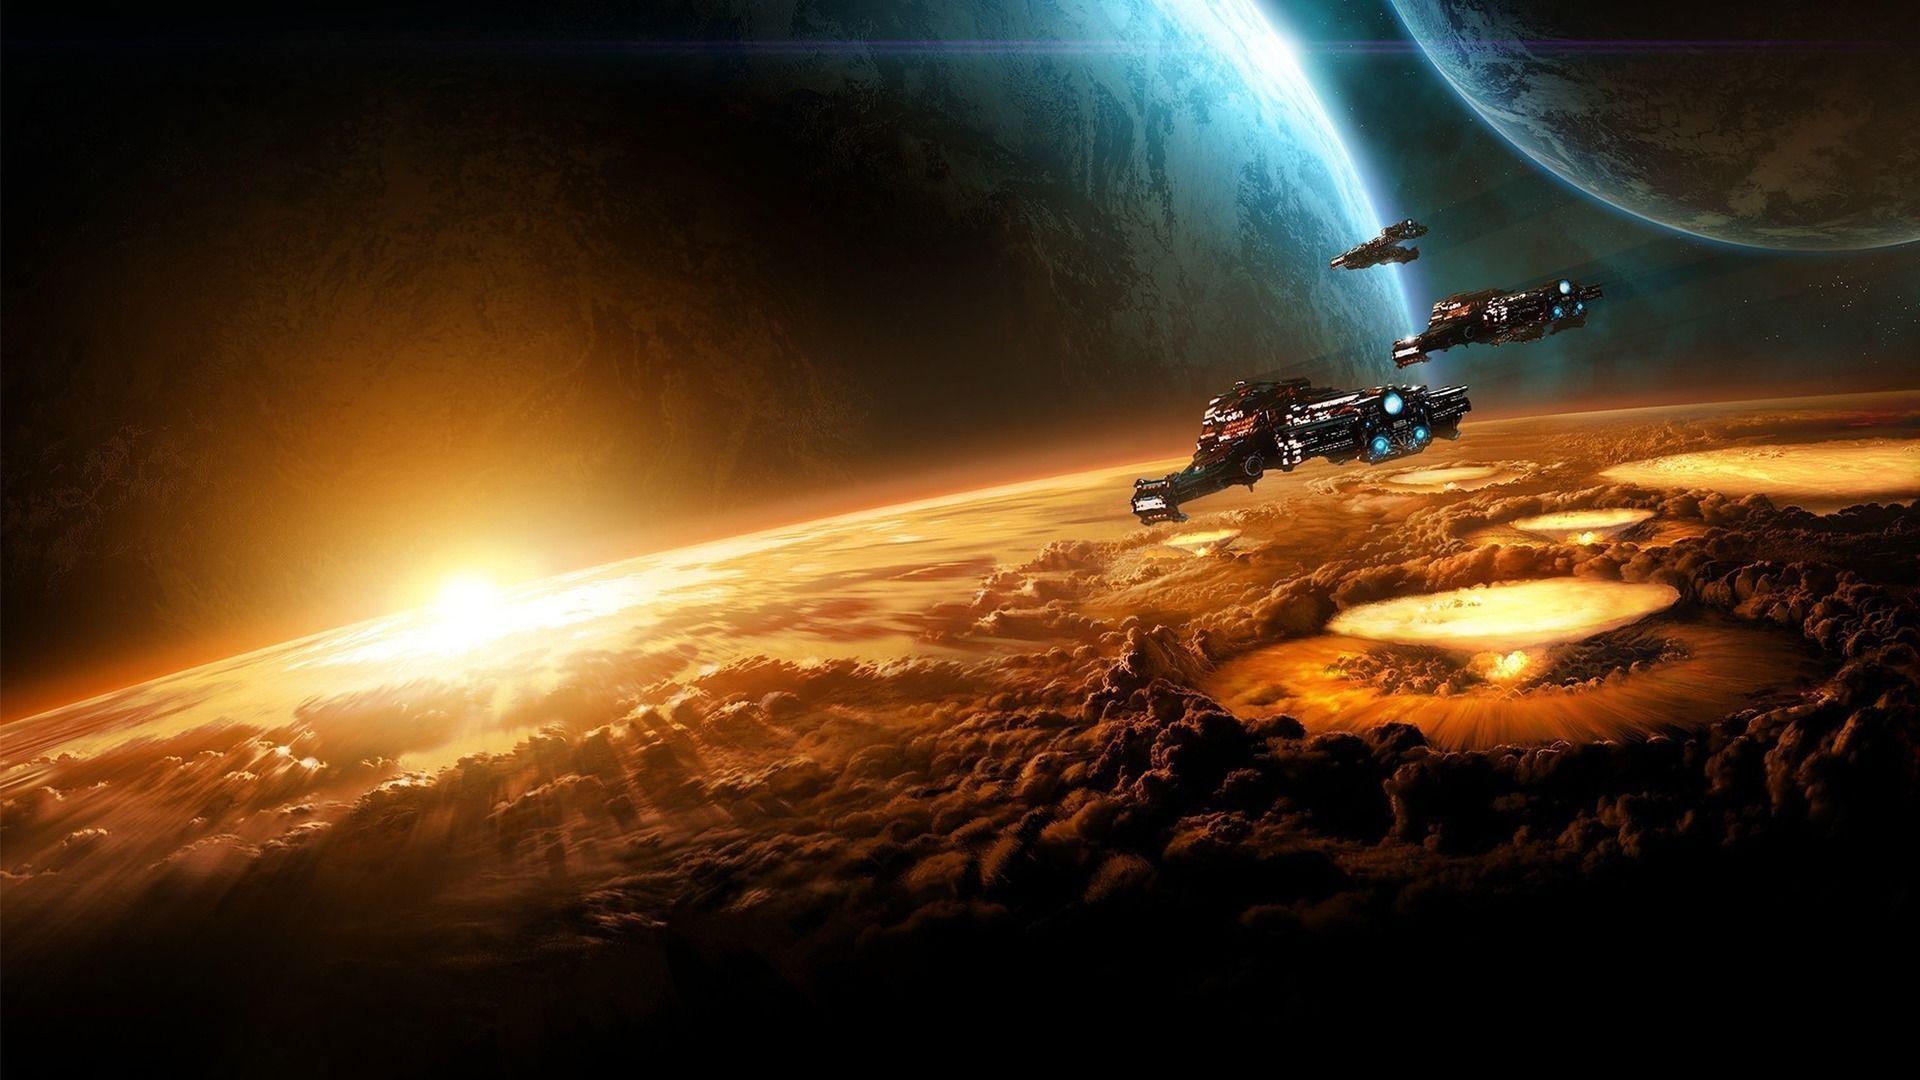 Spaceship, Awesome, Cool, Digital, Galaxy, Planet, Sci Fi. Free